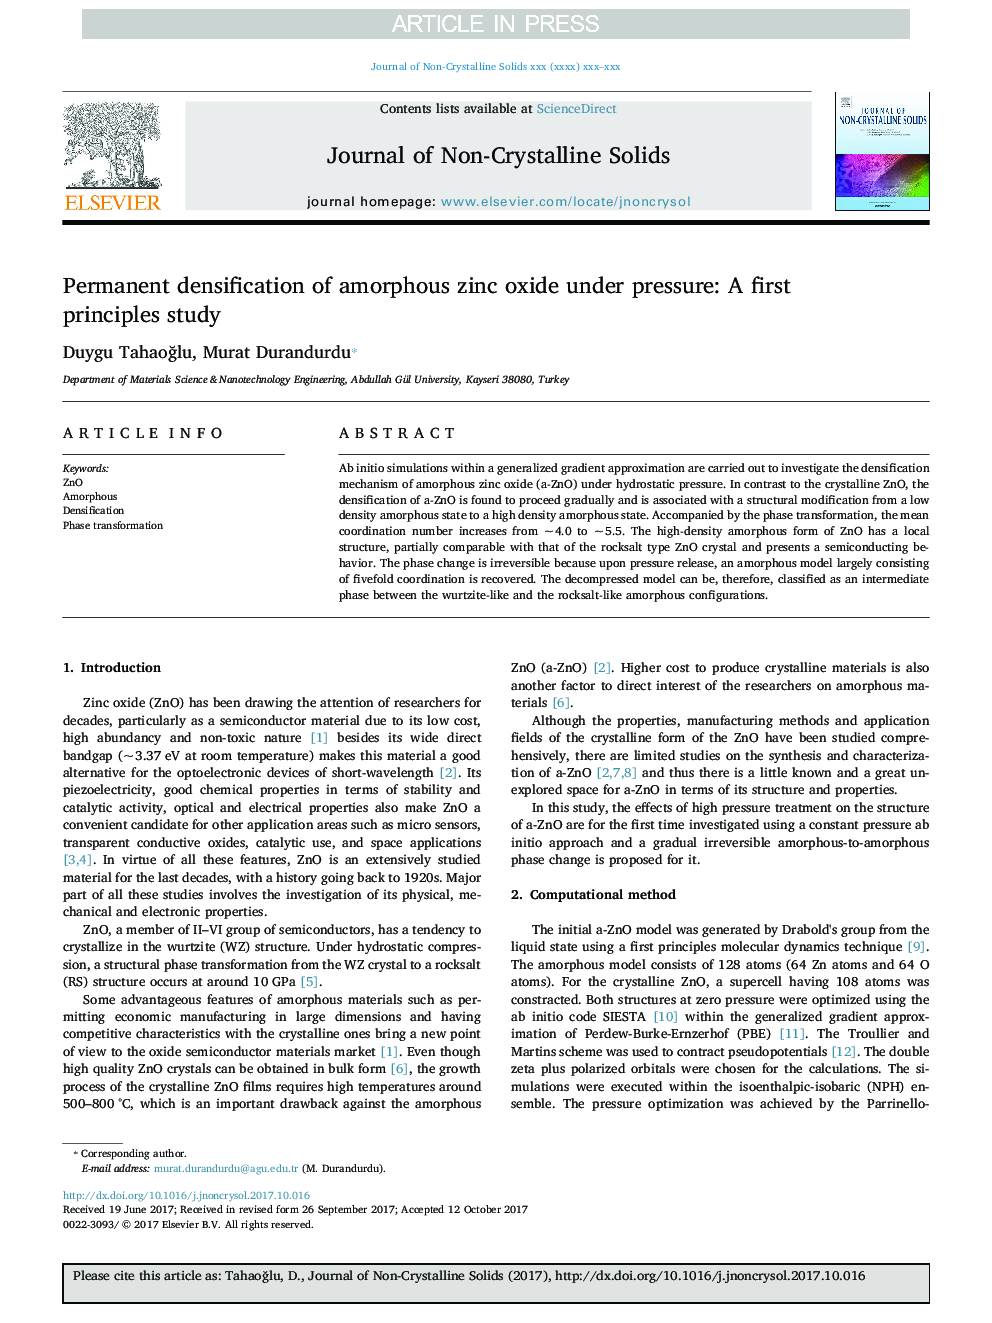 Permanent densification of amorphous zinc oxide under pressure: A first principles study